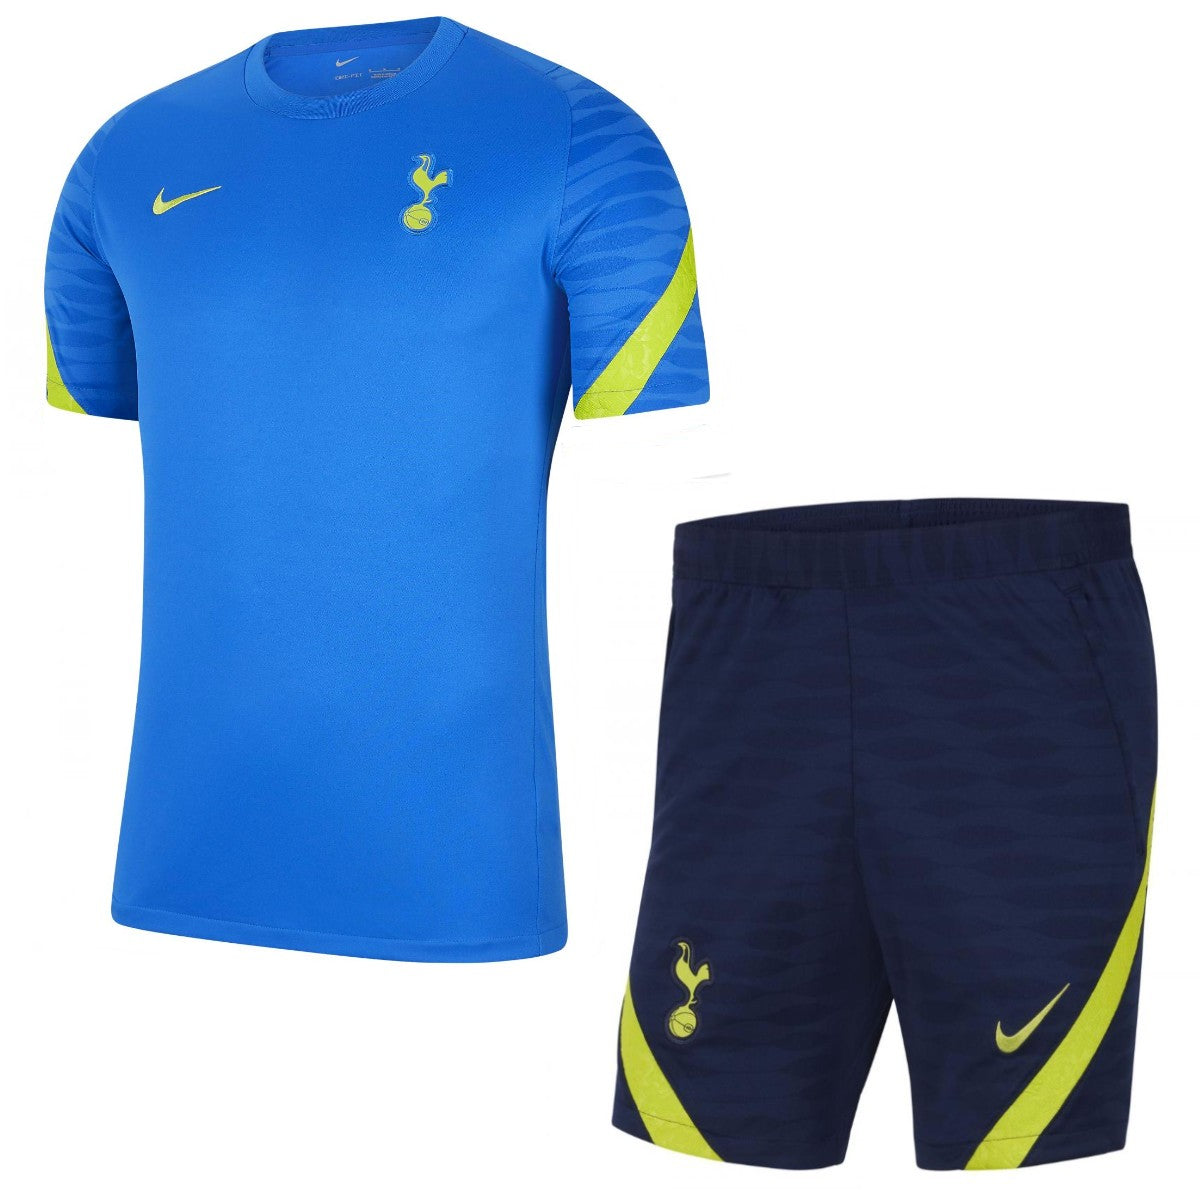 Tottenham Hotspur Royal/Navy Training Soccer Set 2021/22 - Nike Men's Small / Men's 2Extralarge